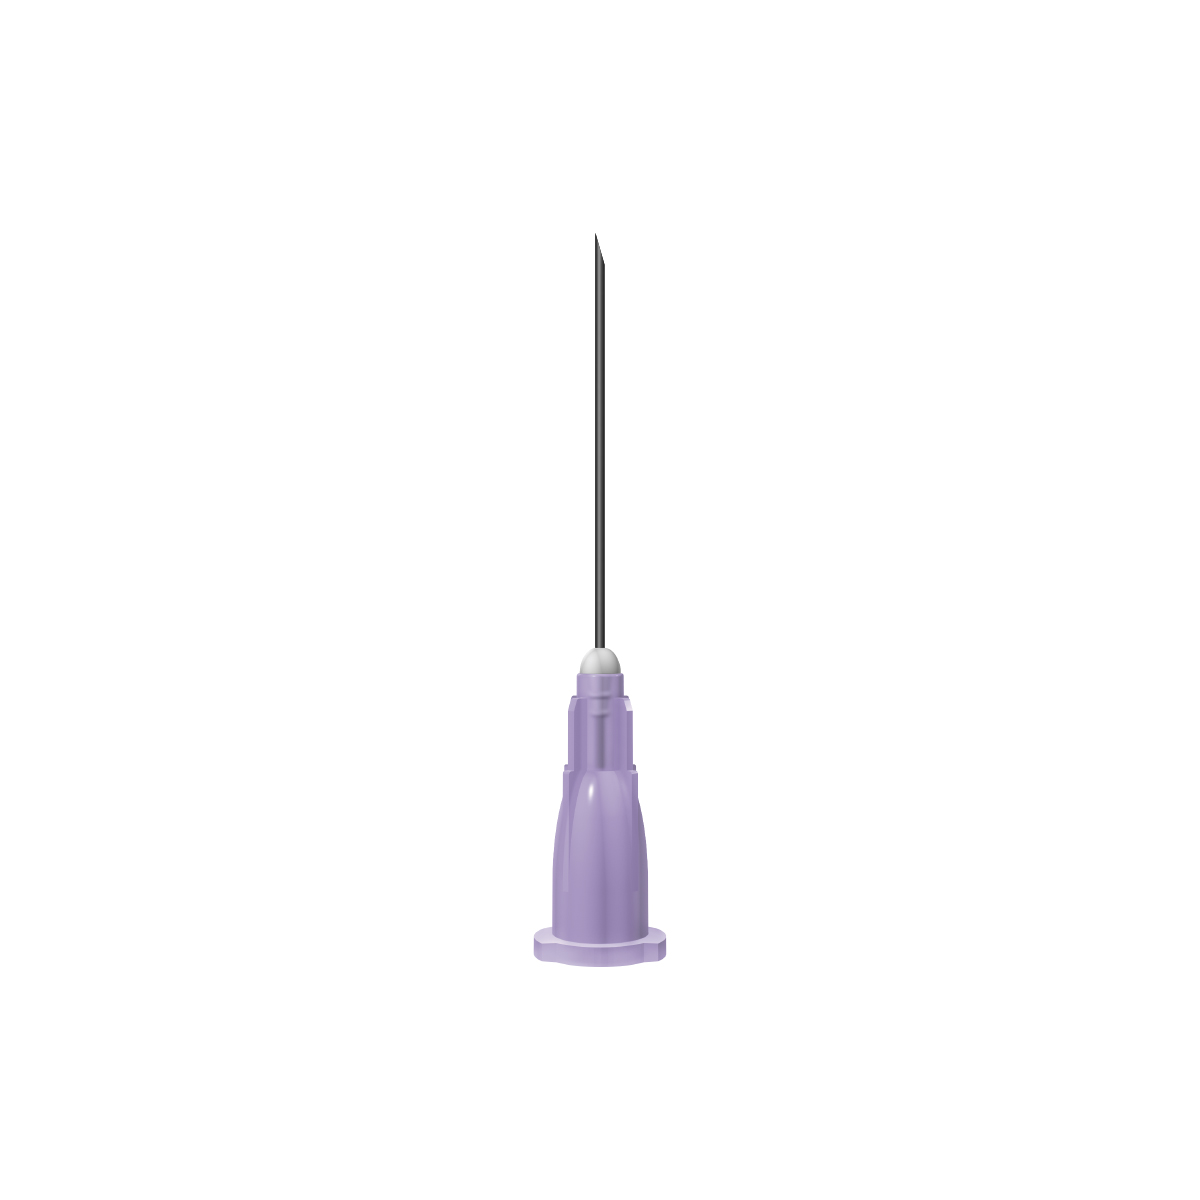 Unisharp: Purple 24G 25mm (1 inch) needle